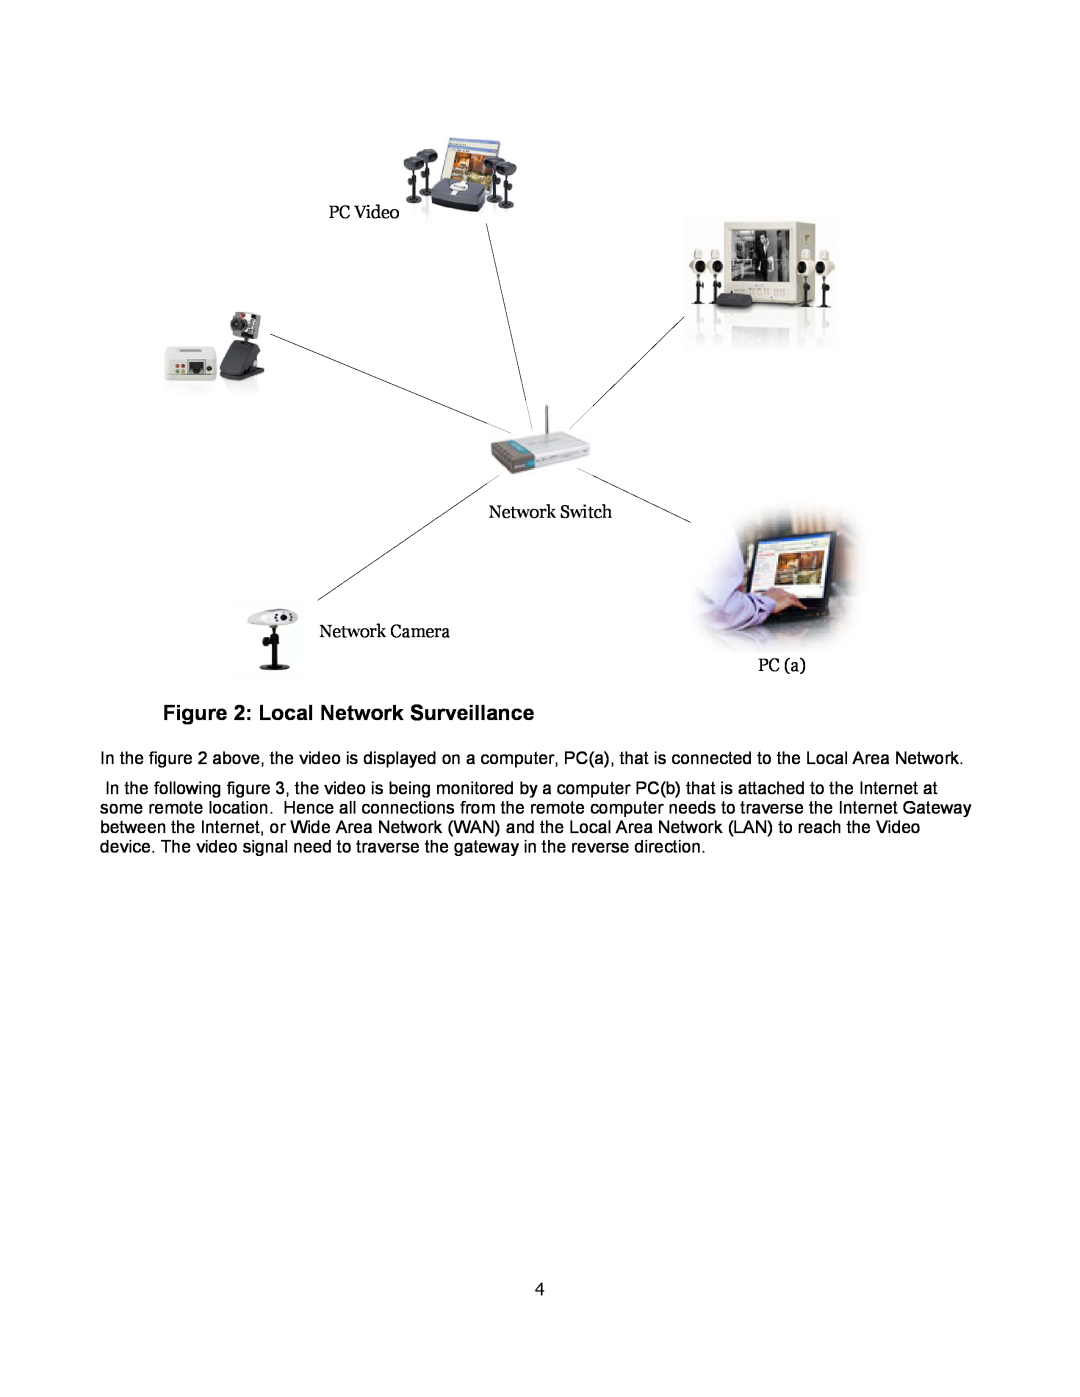 LOREX Technology Surveillance Systems manual Local Network Surveillance, PC Video System Monitor Video Server 